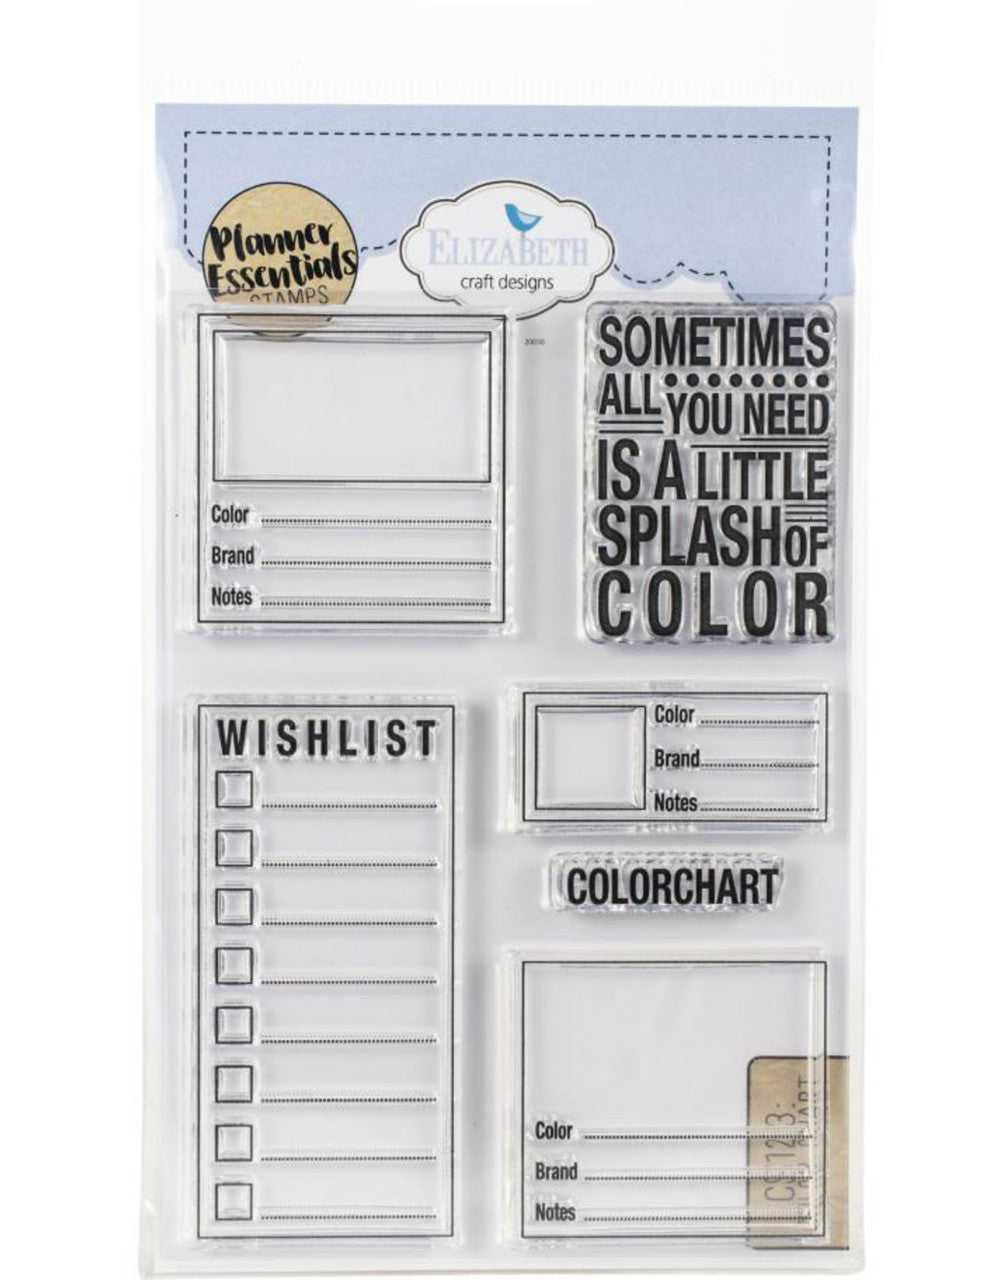 Elizabeth Craft Planner Essentials Stempels Kleurenkaart